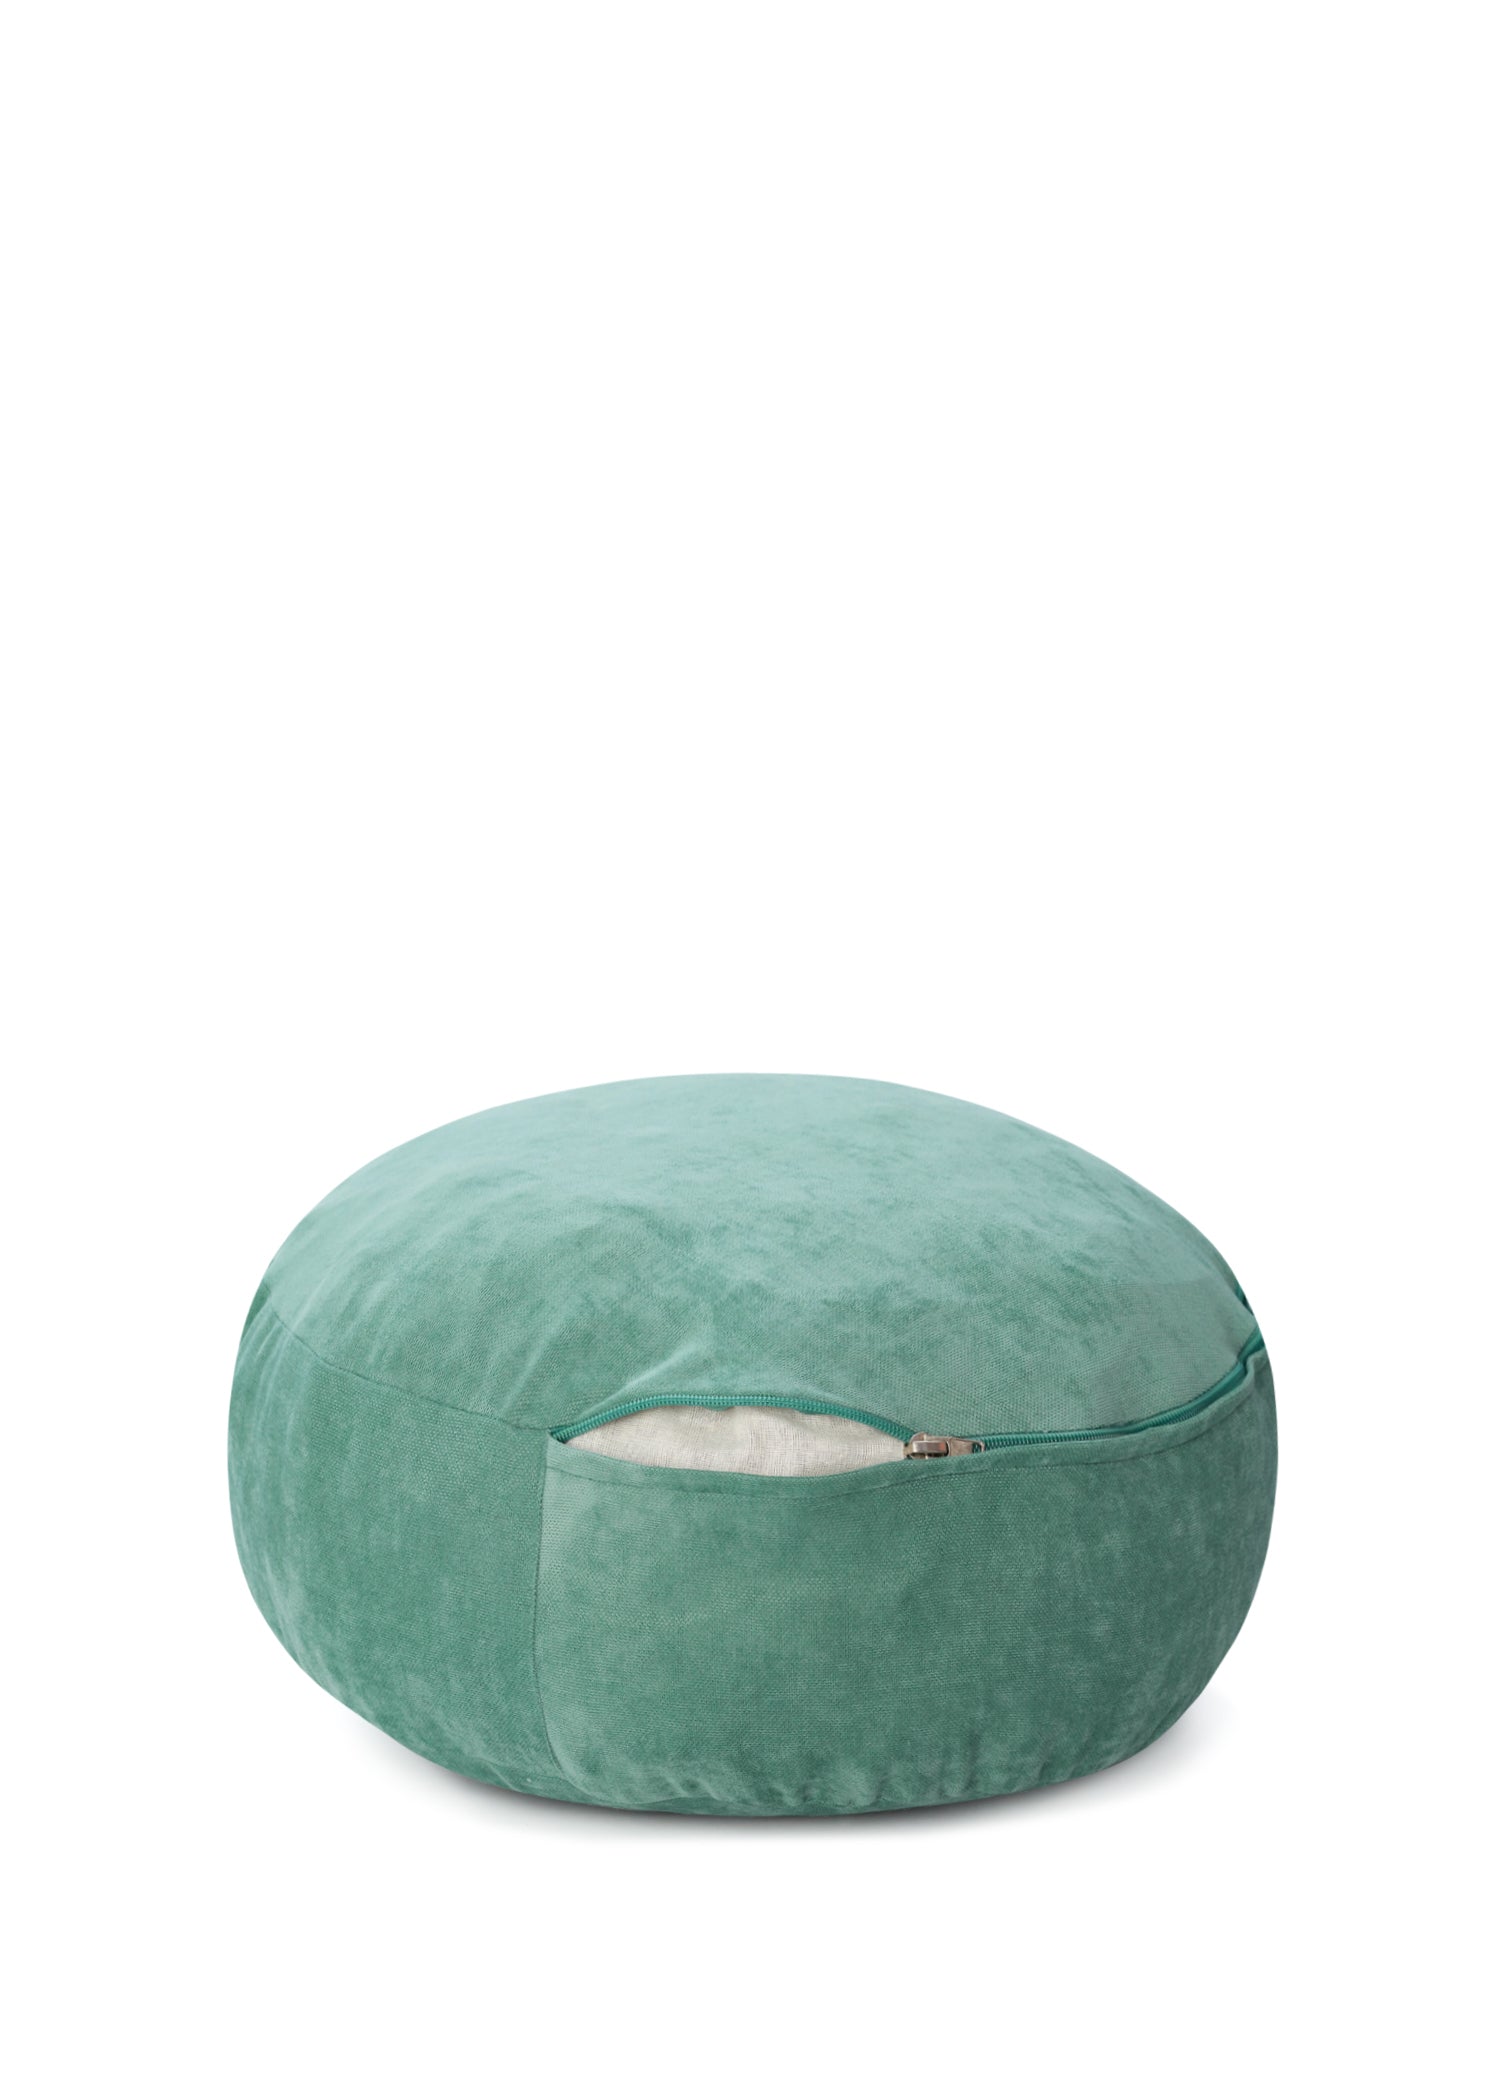 Green Meditation Cushion 40 Cm Diameter